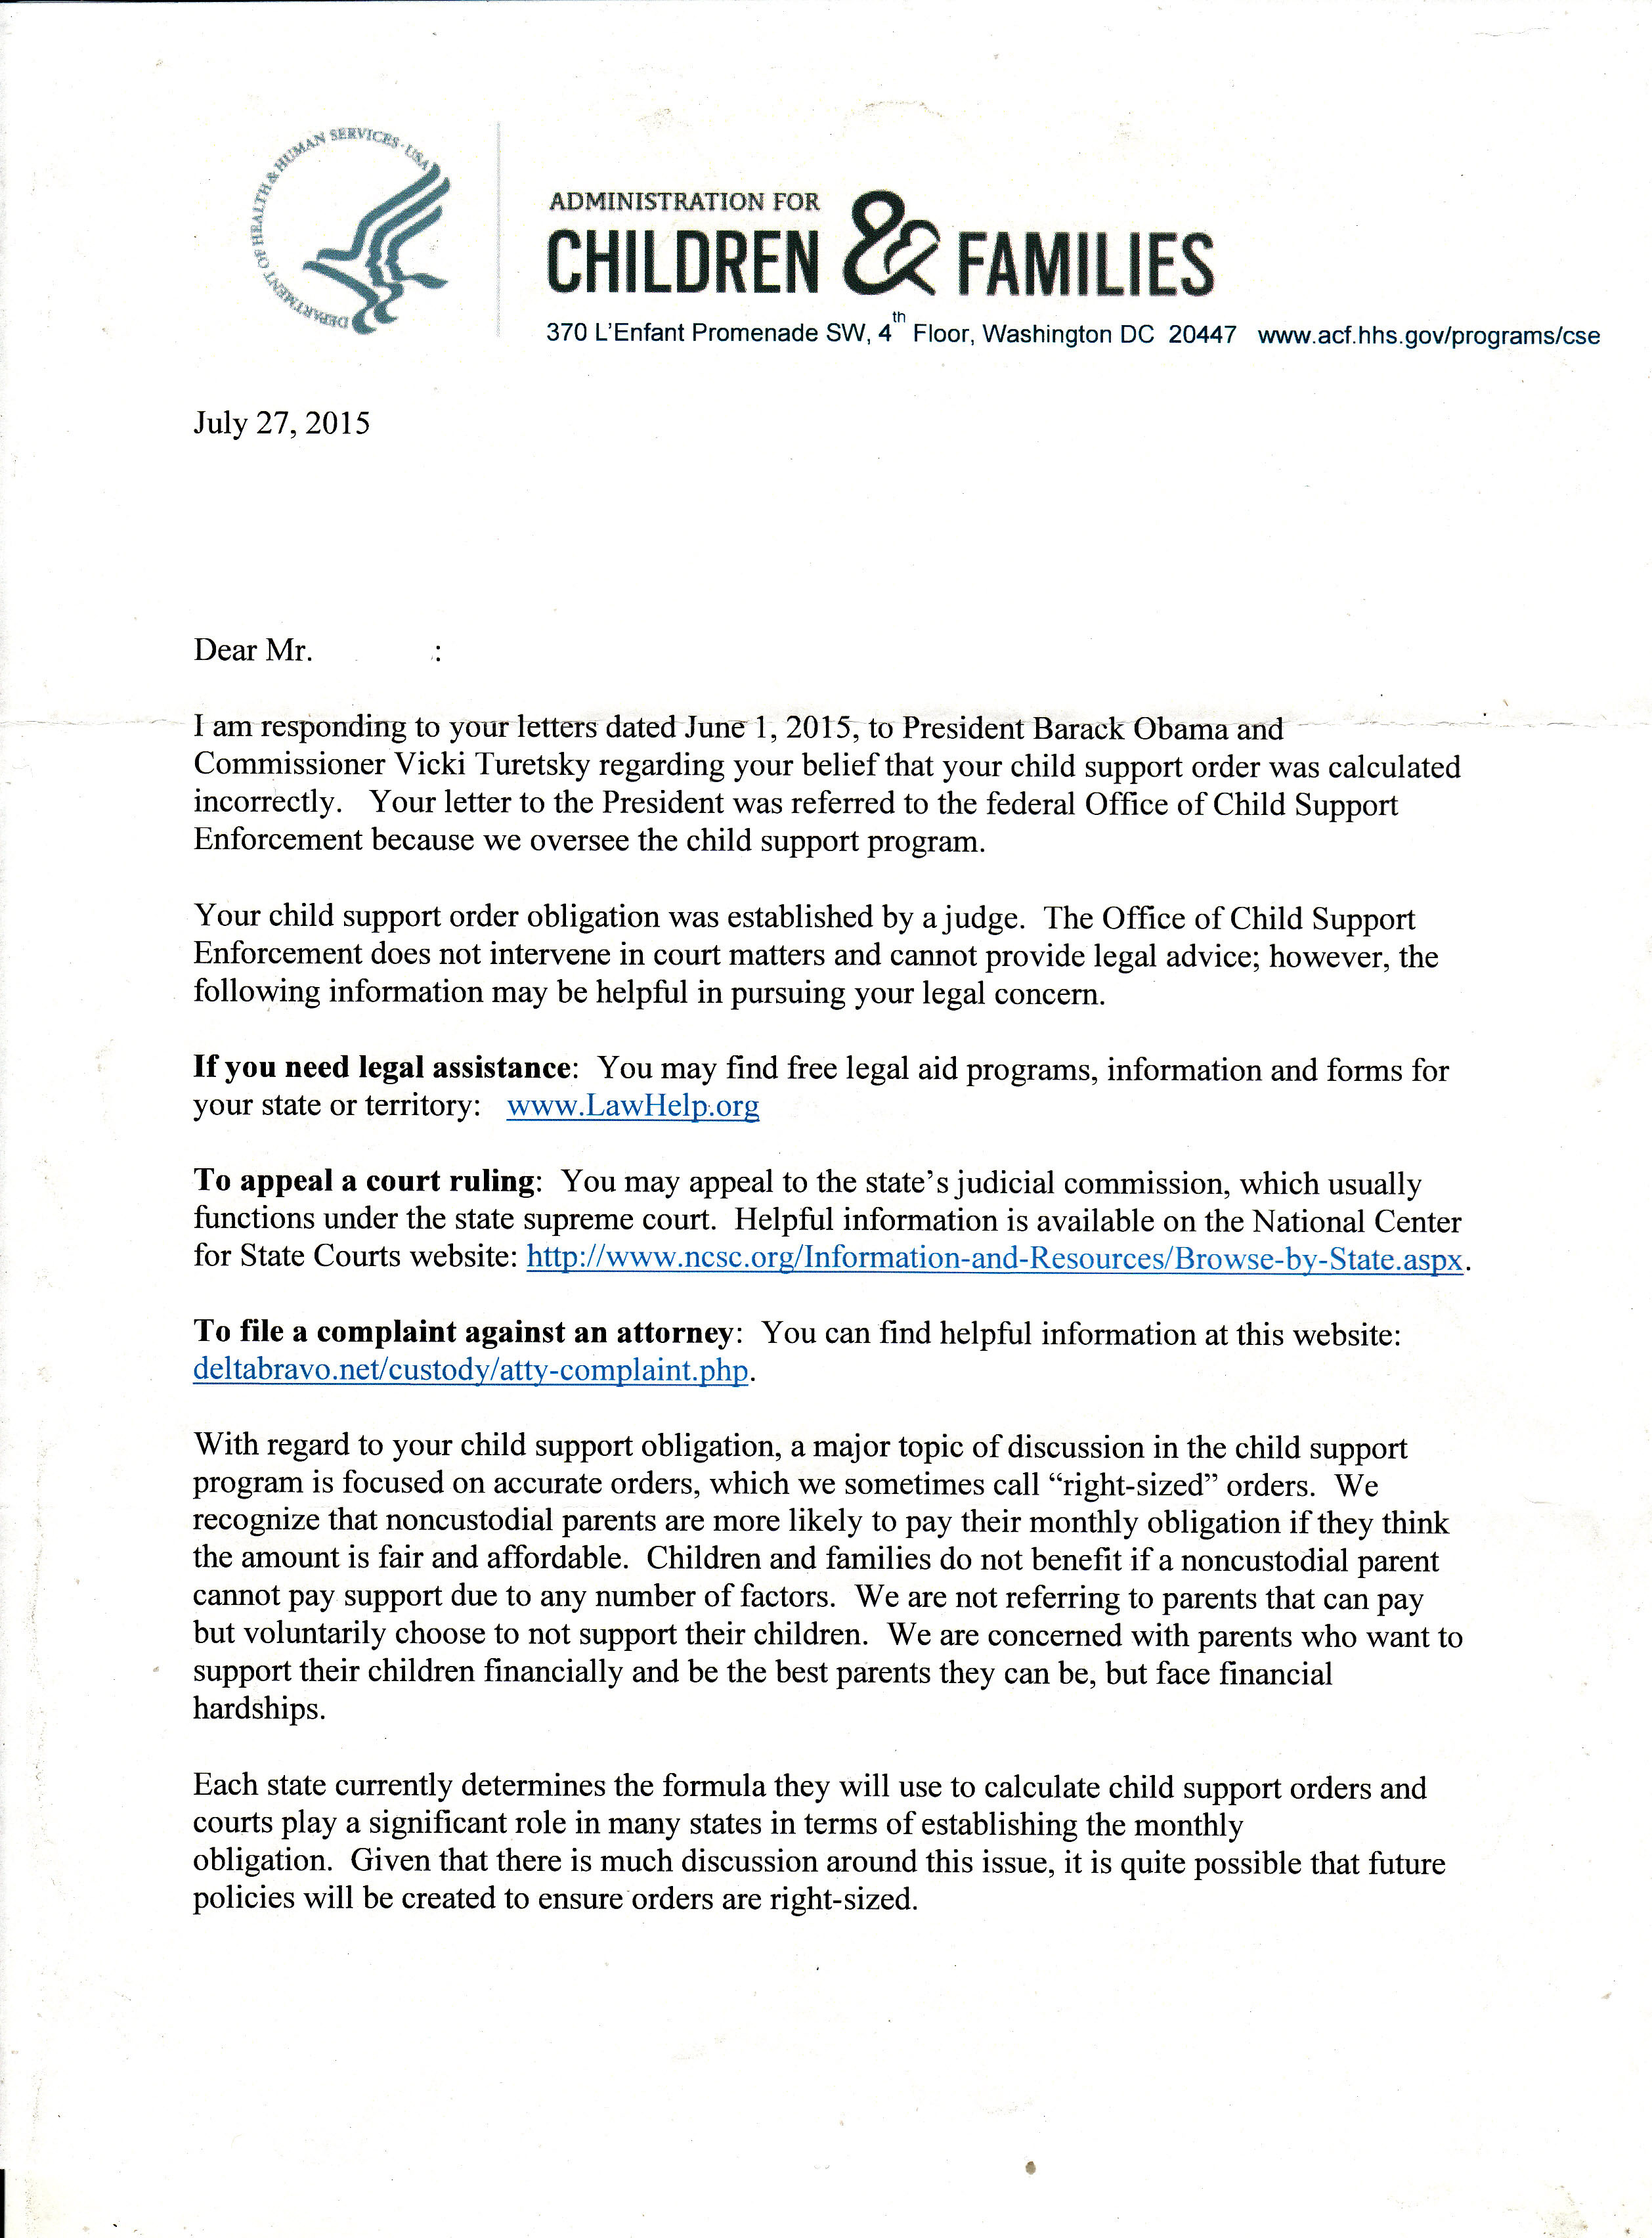 Reply Letter From President Barack Obama and Vicki Turetsky